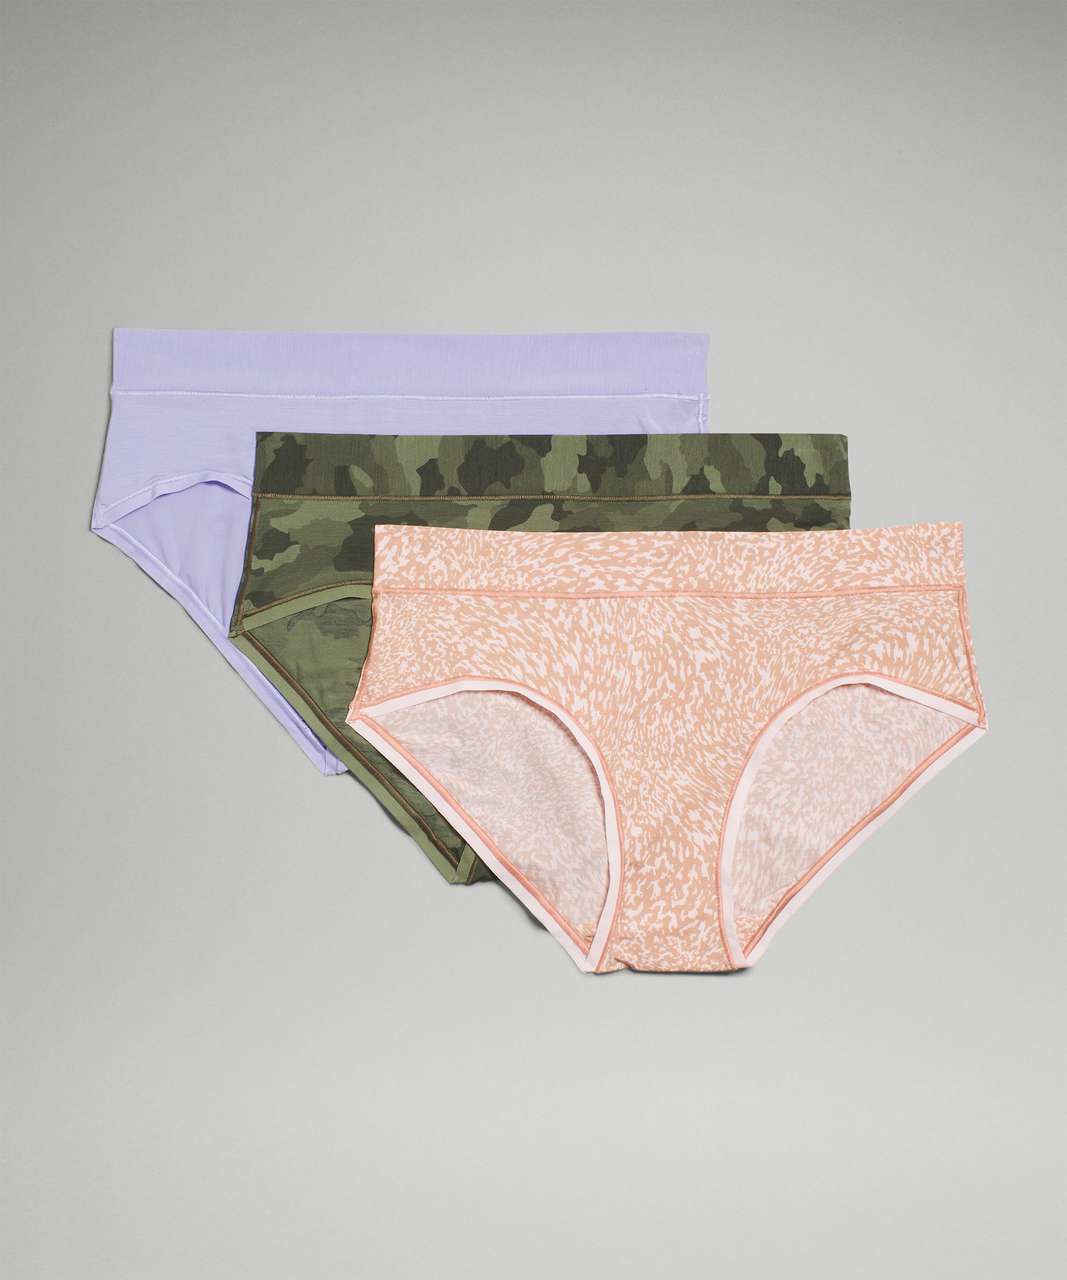 Lululemon UnderEase Mid-Rise Hipster Underwear 3 Pack - Lilac Smoke / Heritage 365 Camo Mini Green Twill Multi / Warped Grain Strawberry Milkshake Pink Clay